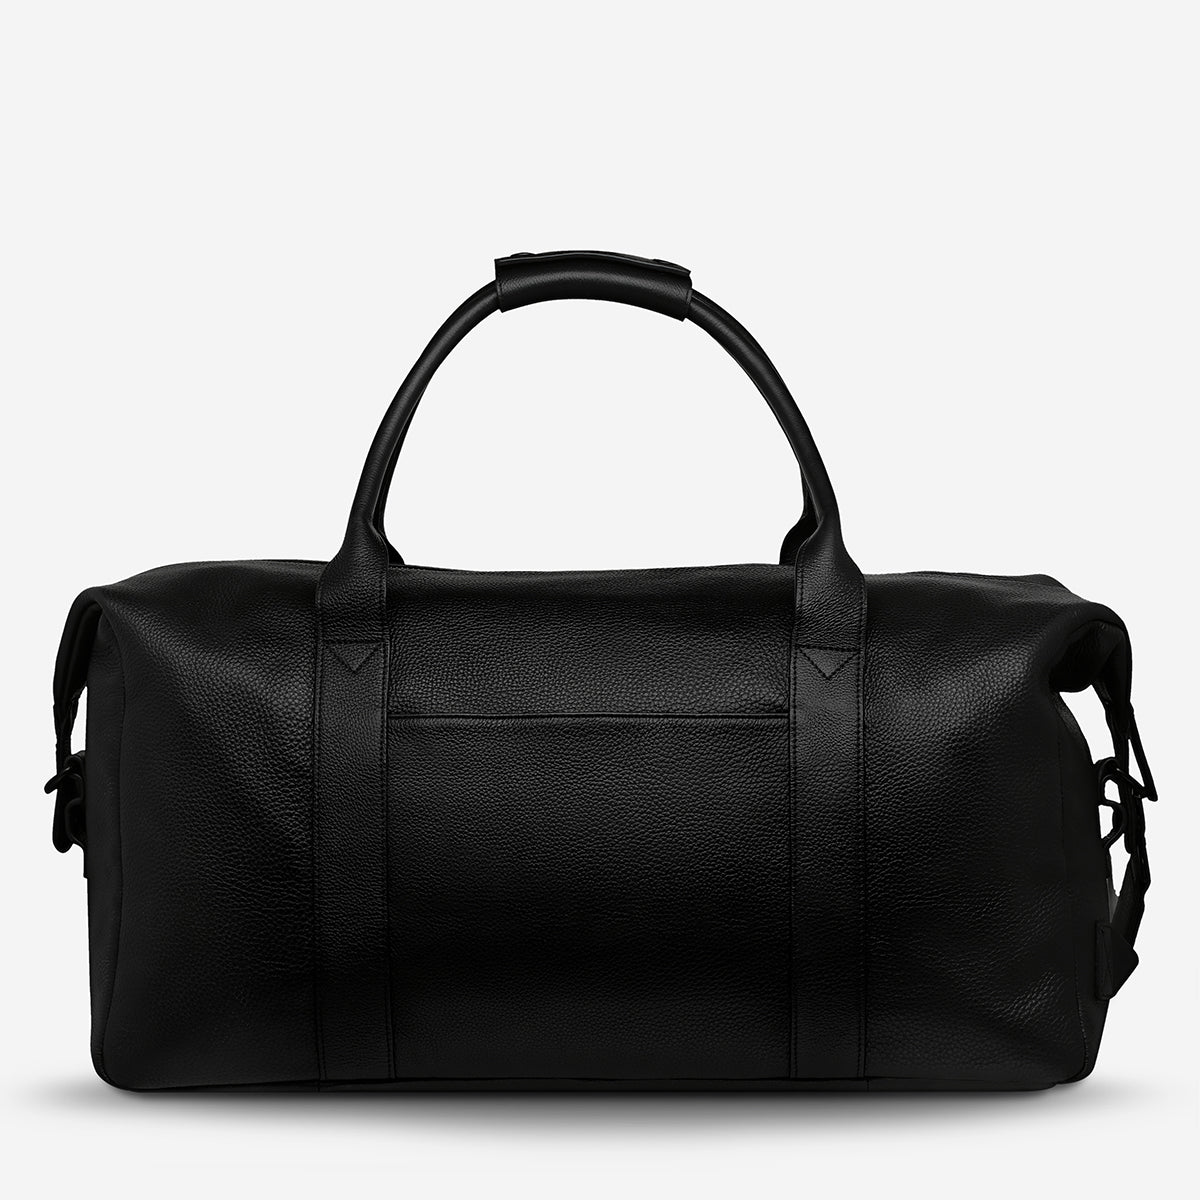 Everything I Wanted Bag - Black Leather